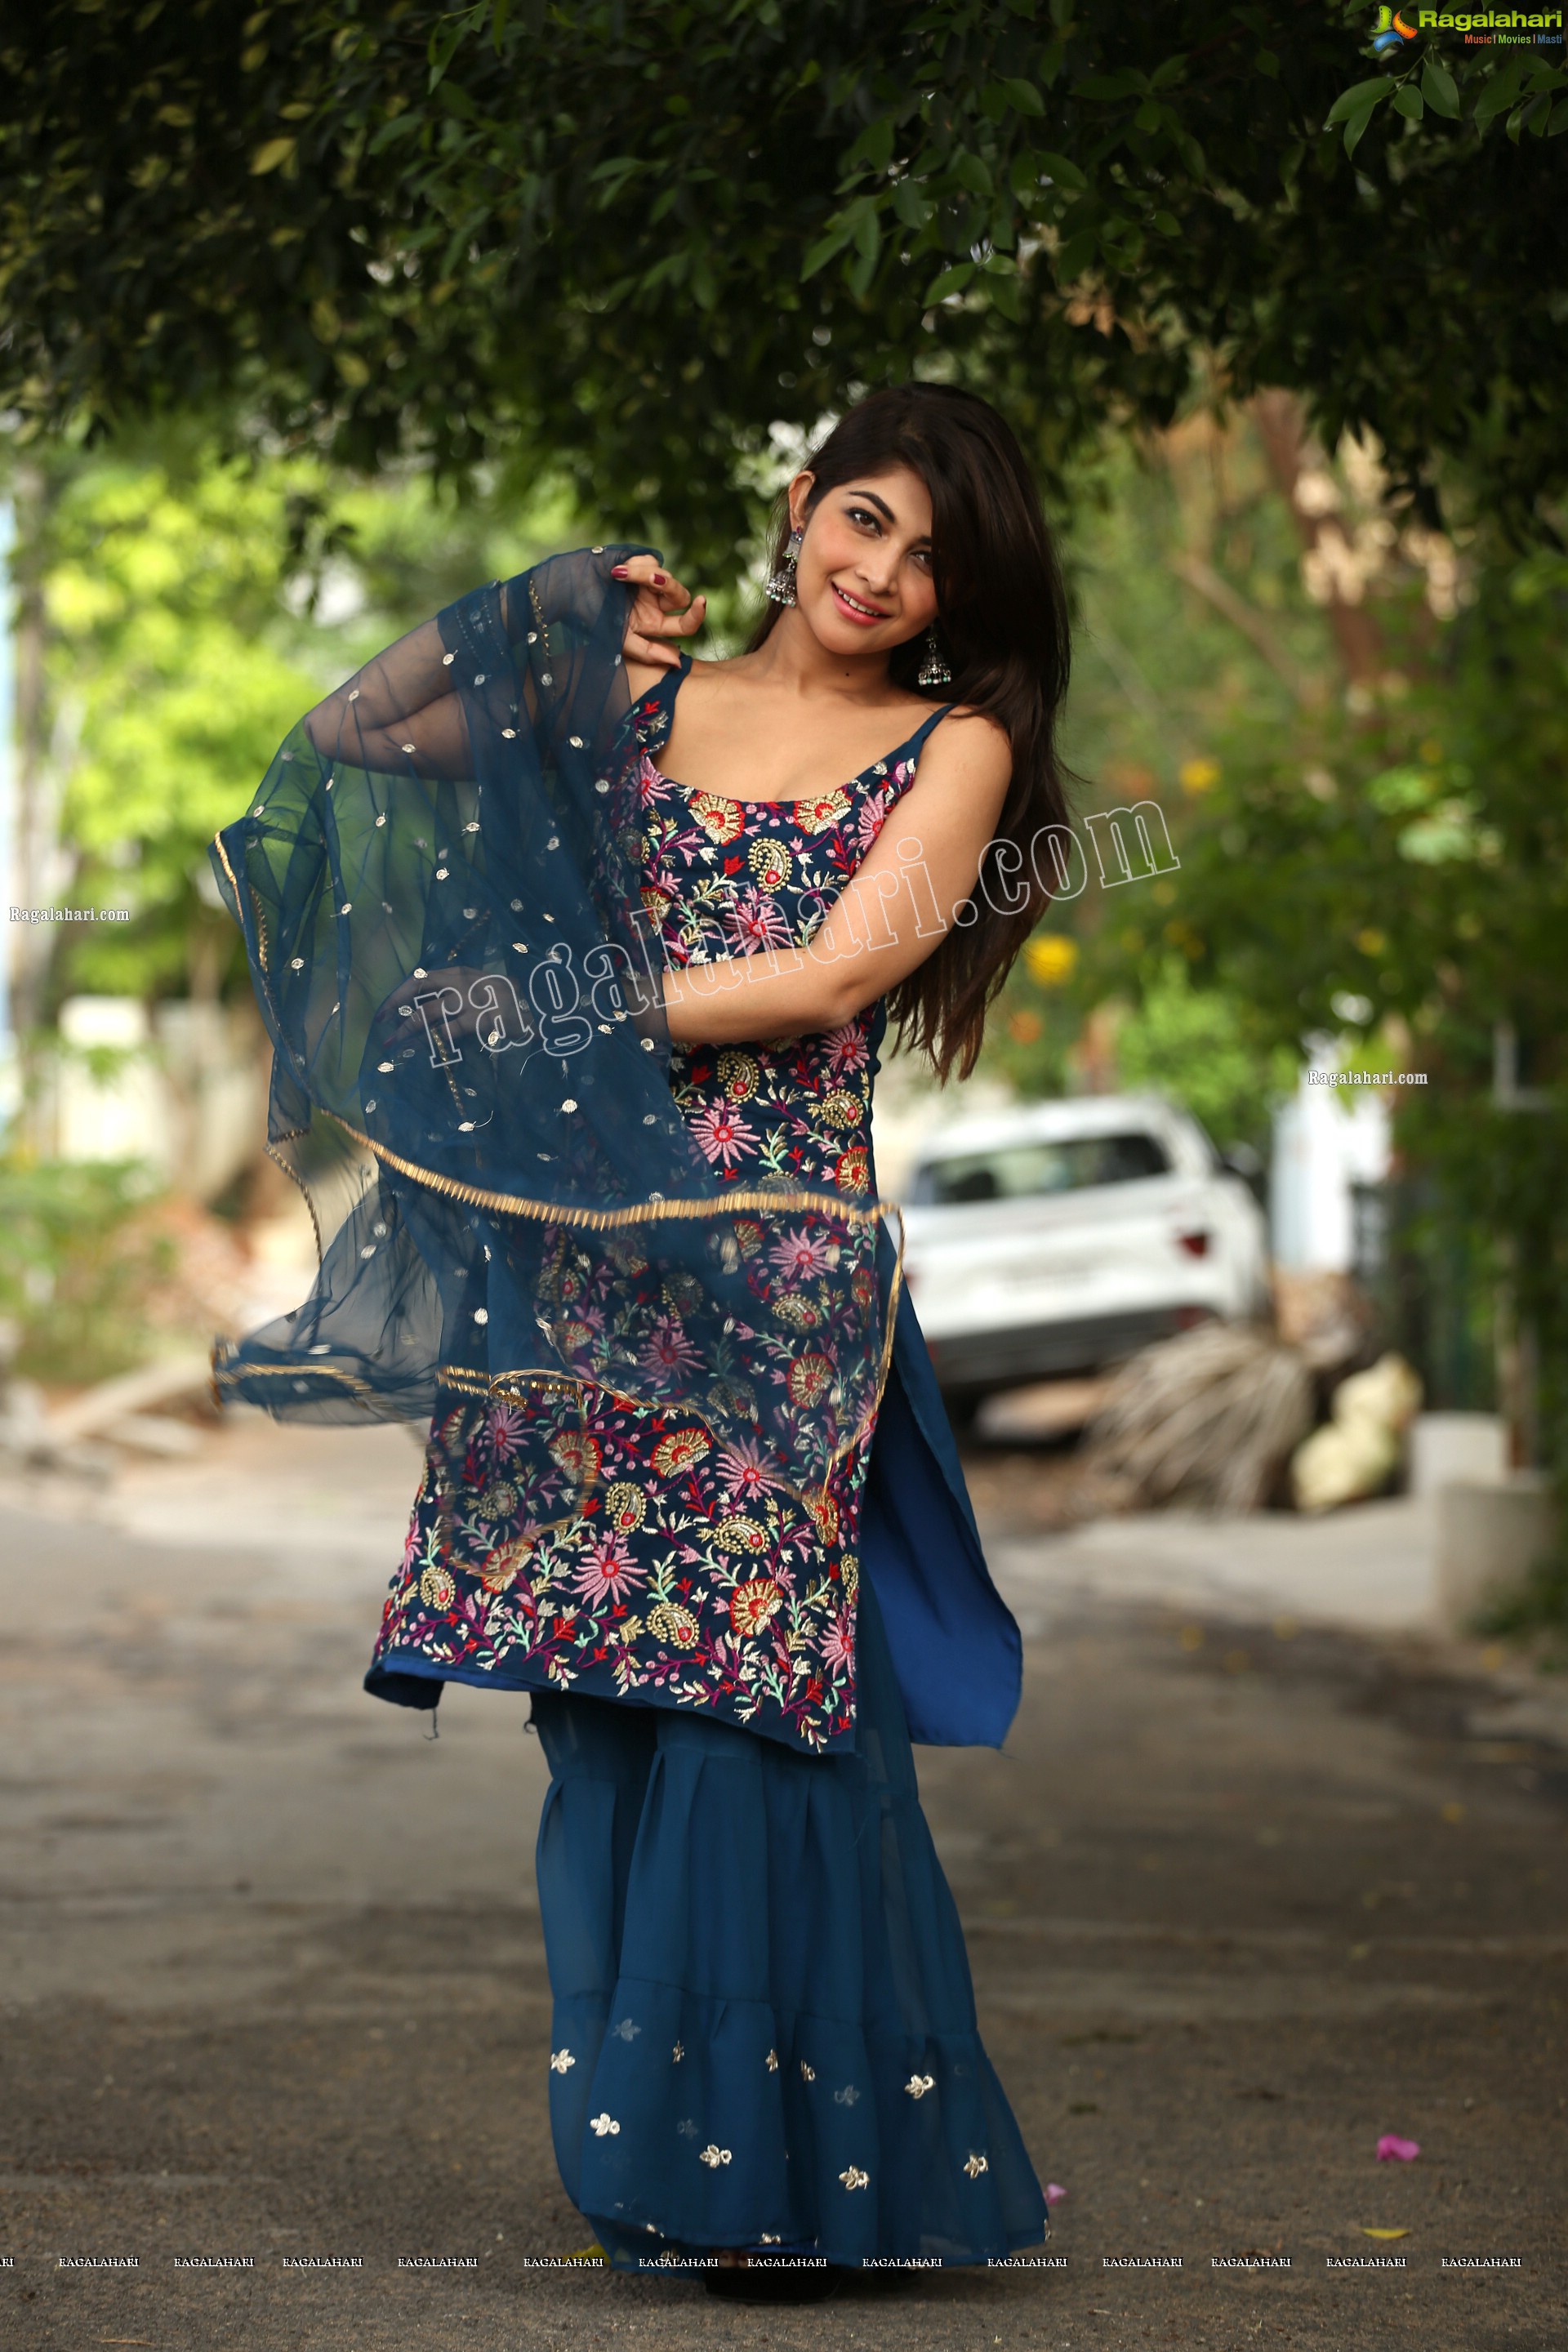 Srijita Ghosh in Teal Blue Lehenga with Long Kurti, Exclusive Photo Shoot